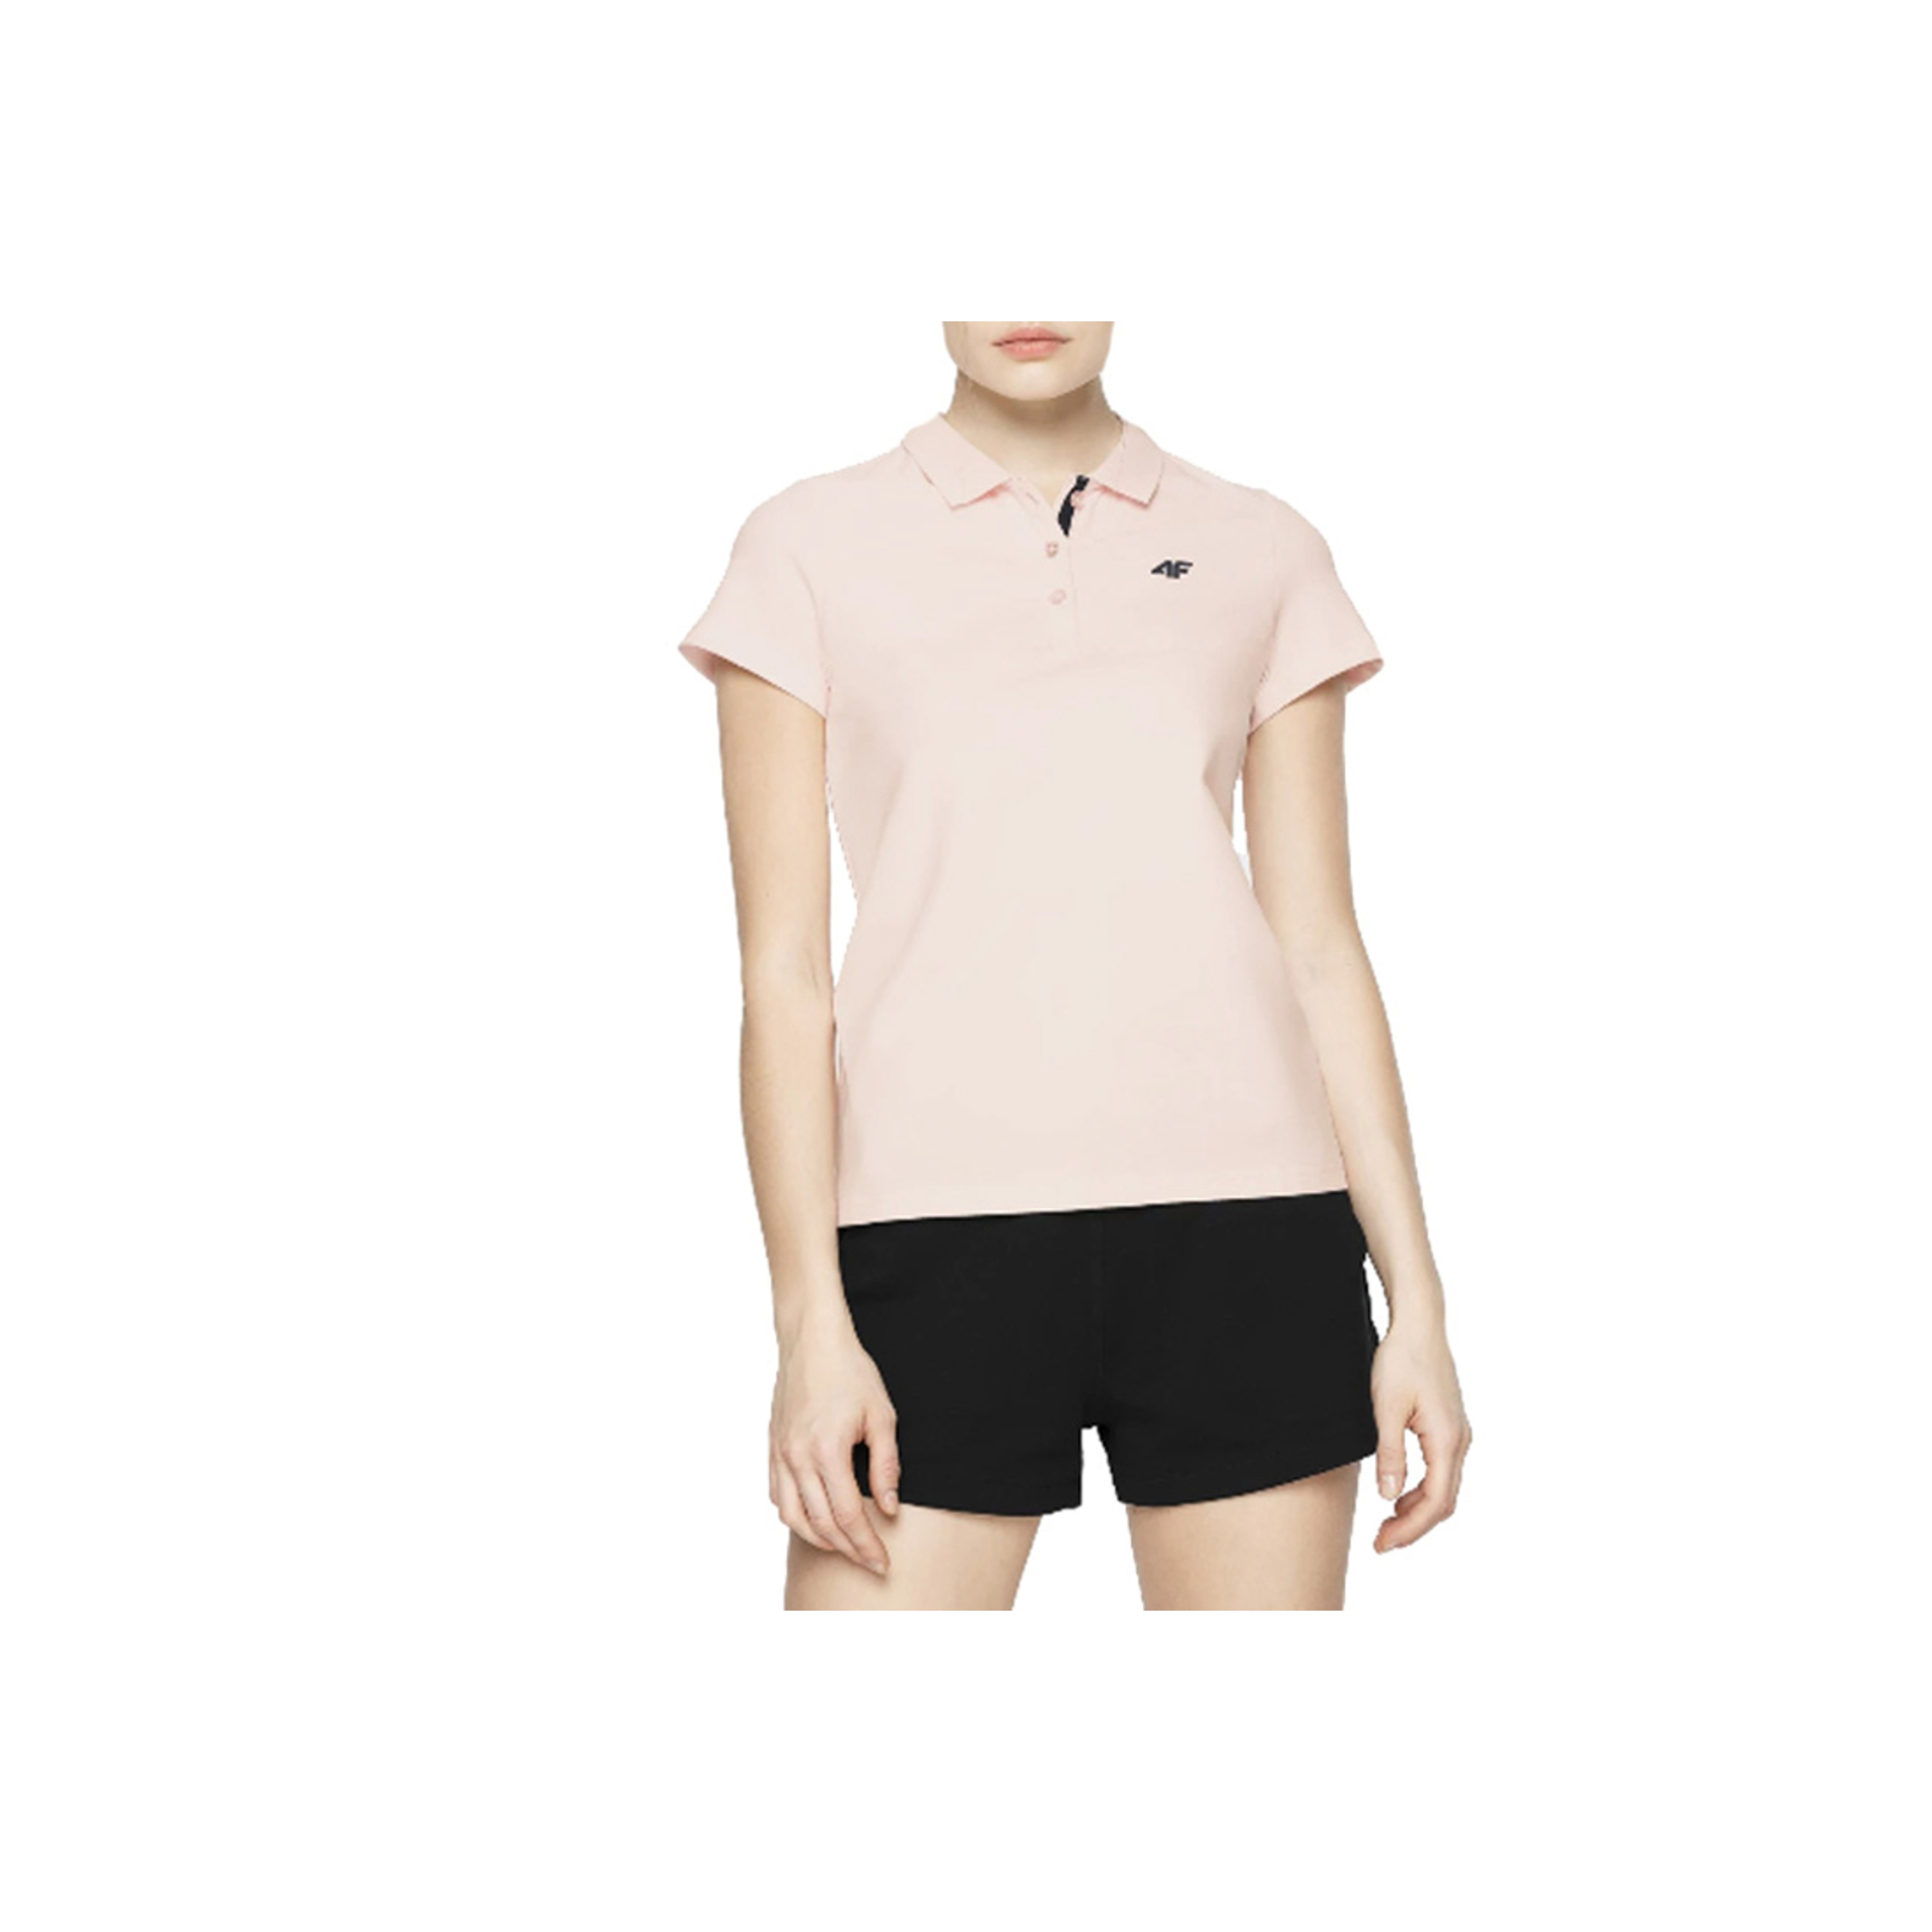 4f Women's T-shirt Polo Nosh4-tsd007-56s - rosa - 